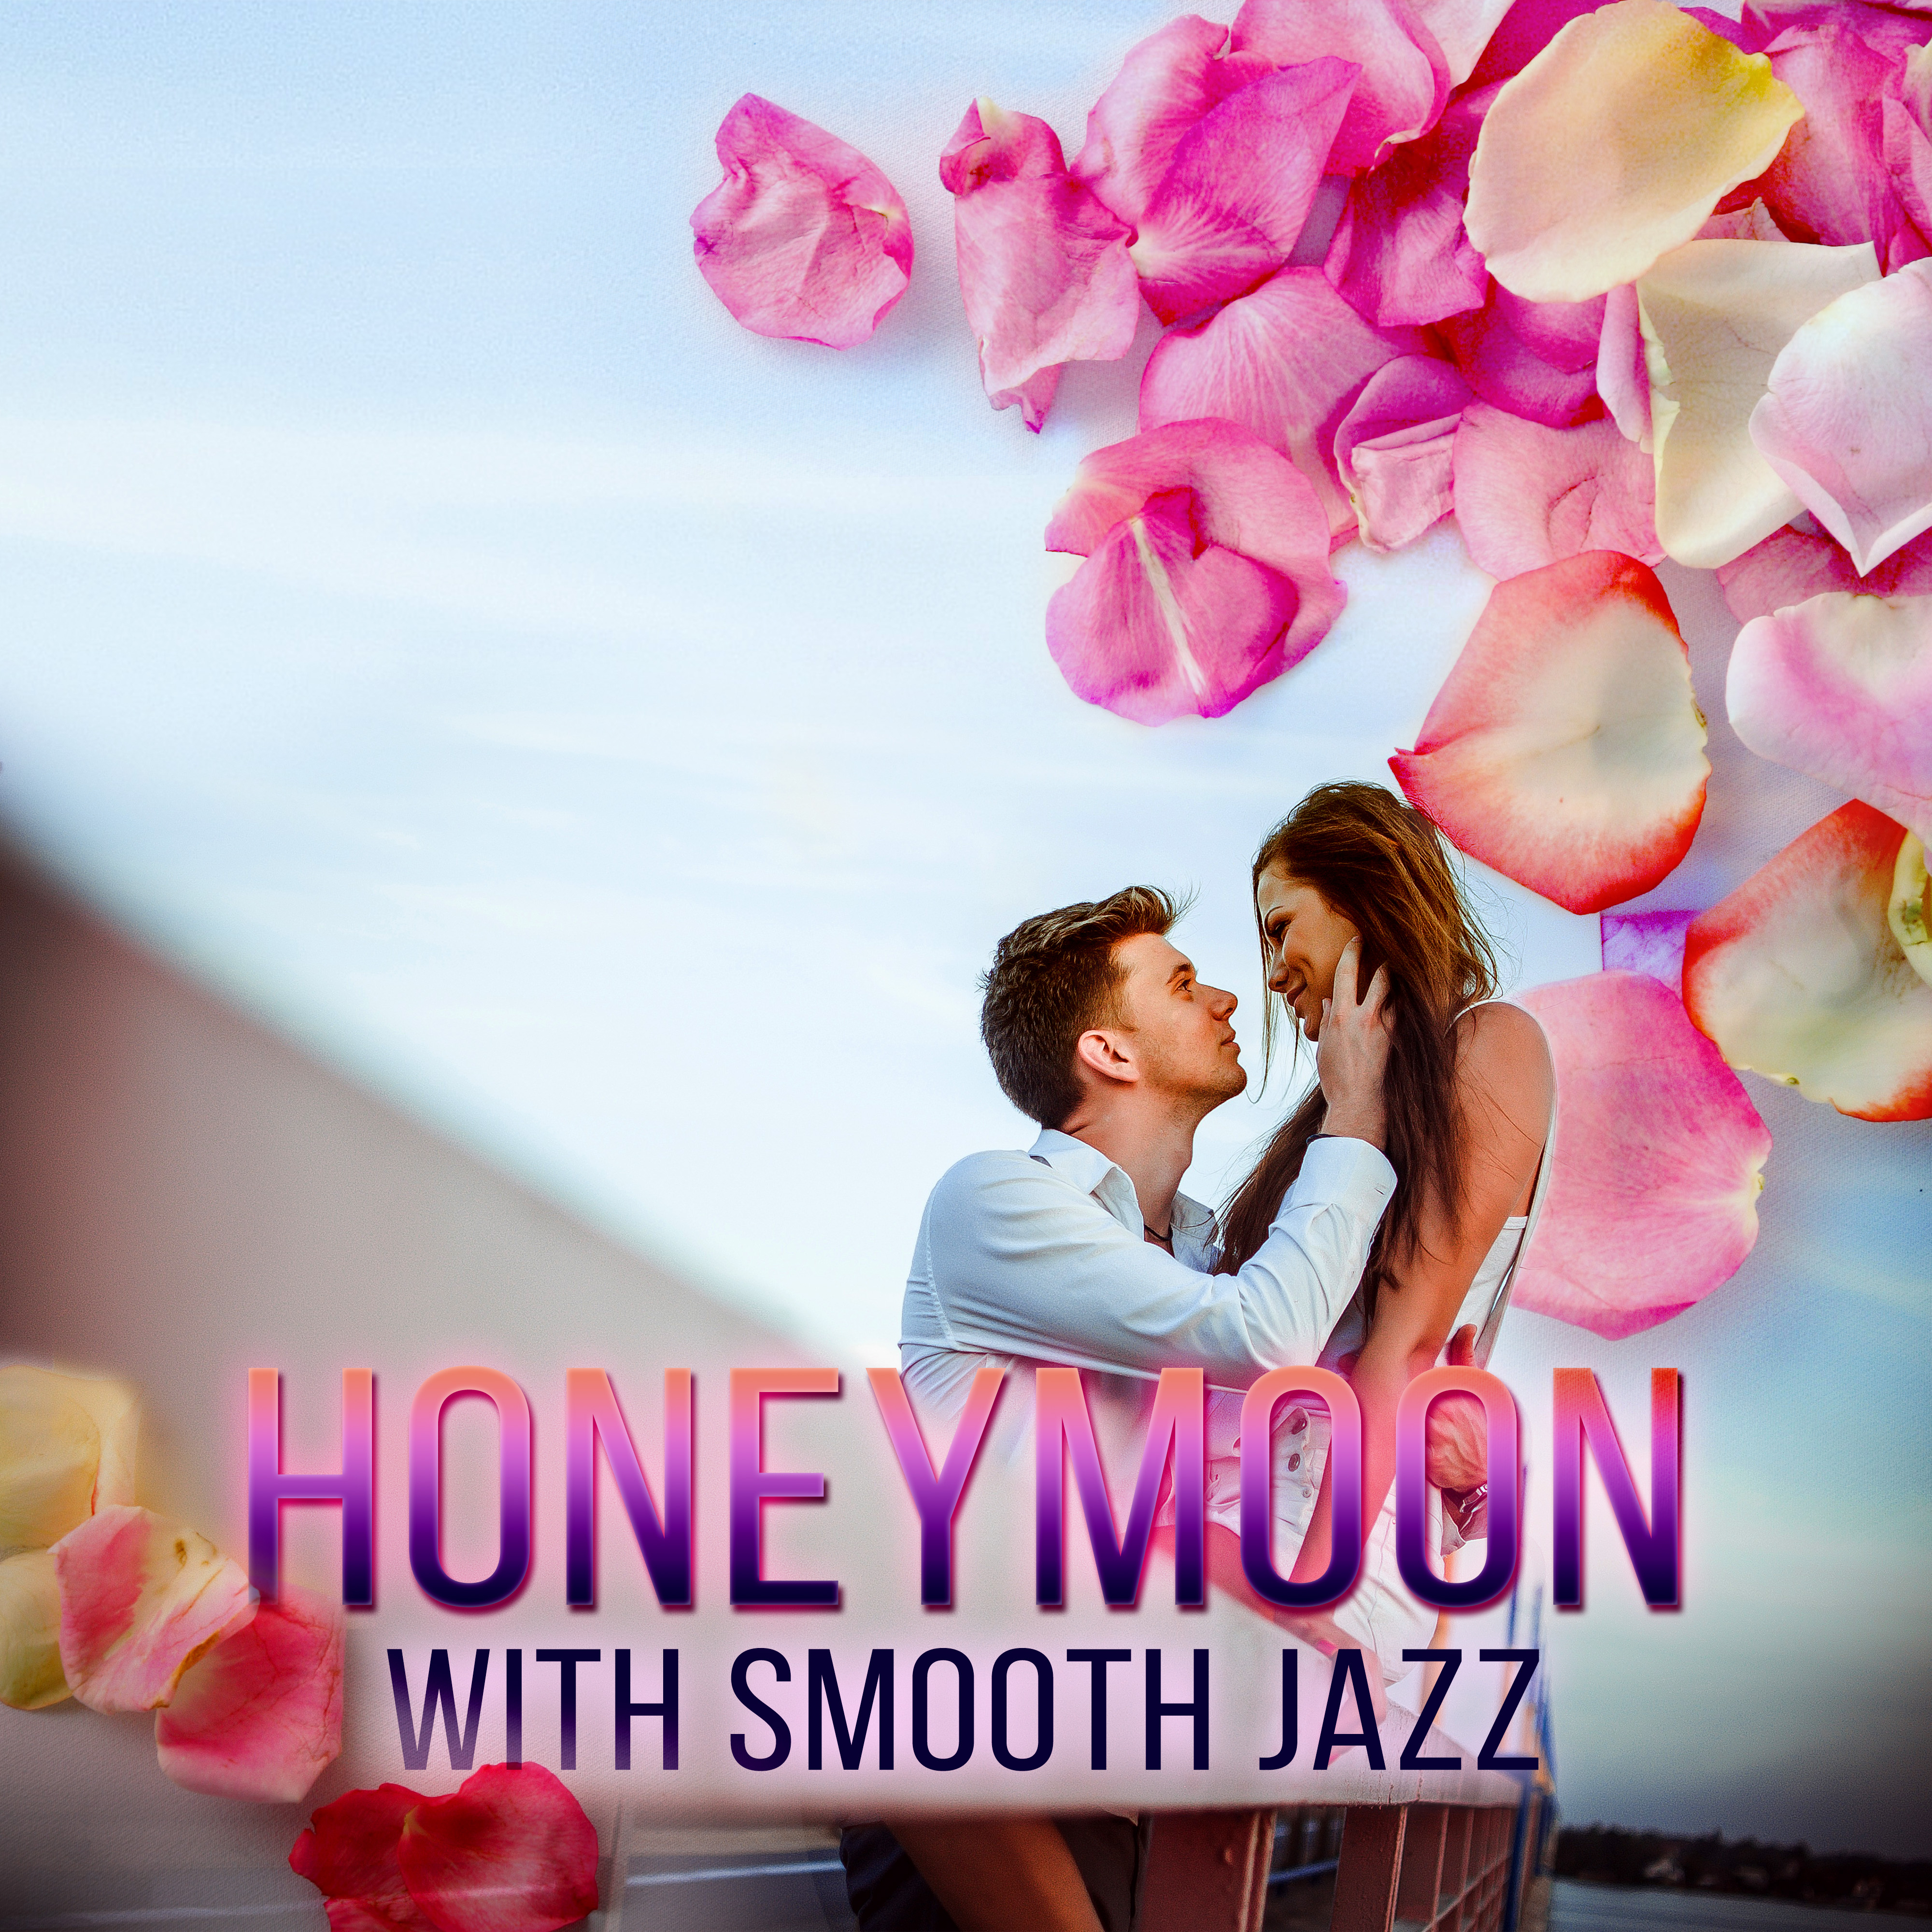 Honeymoon with Smooth Jazz